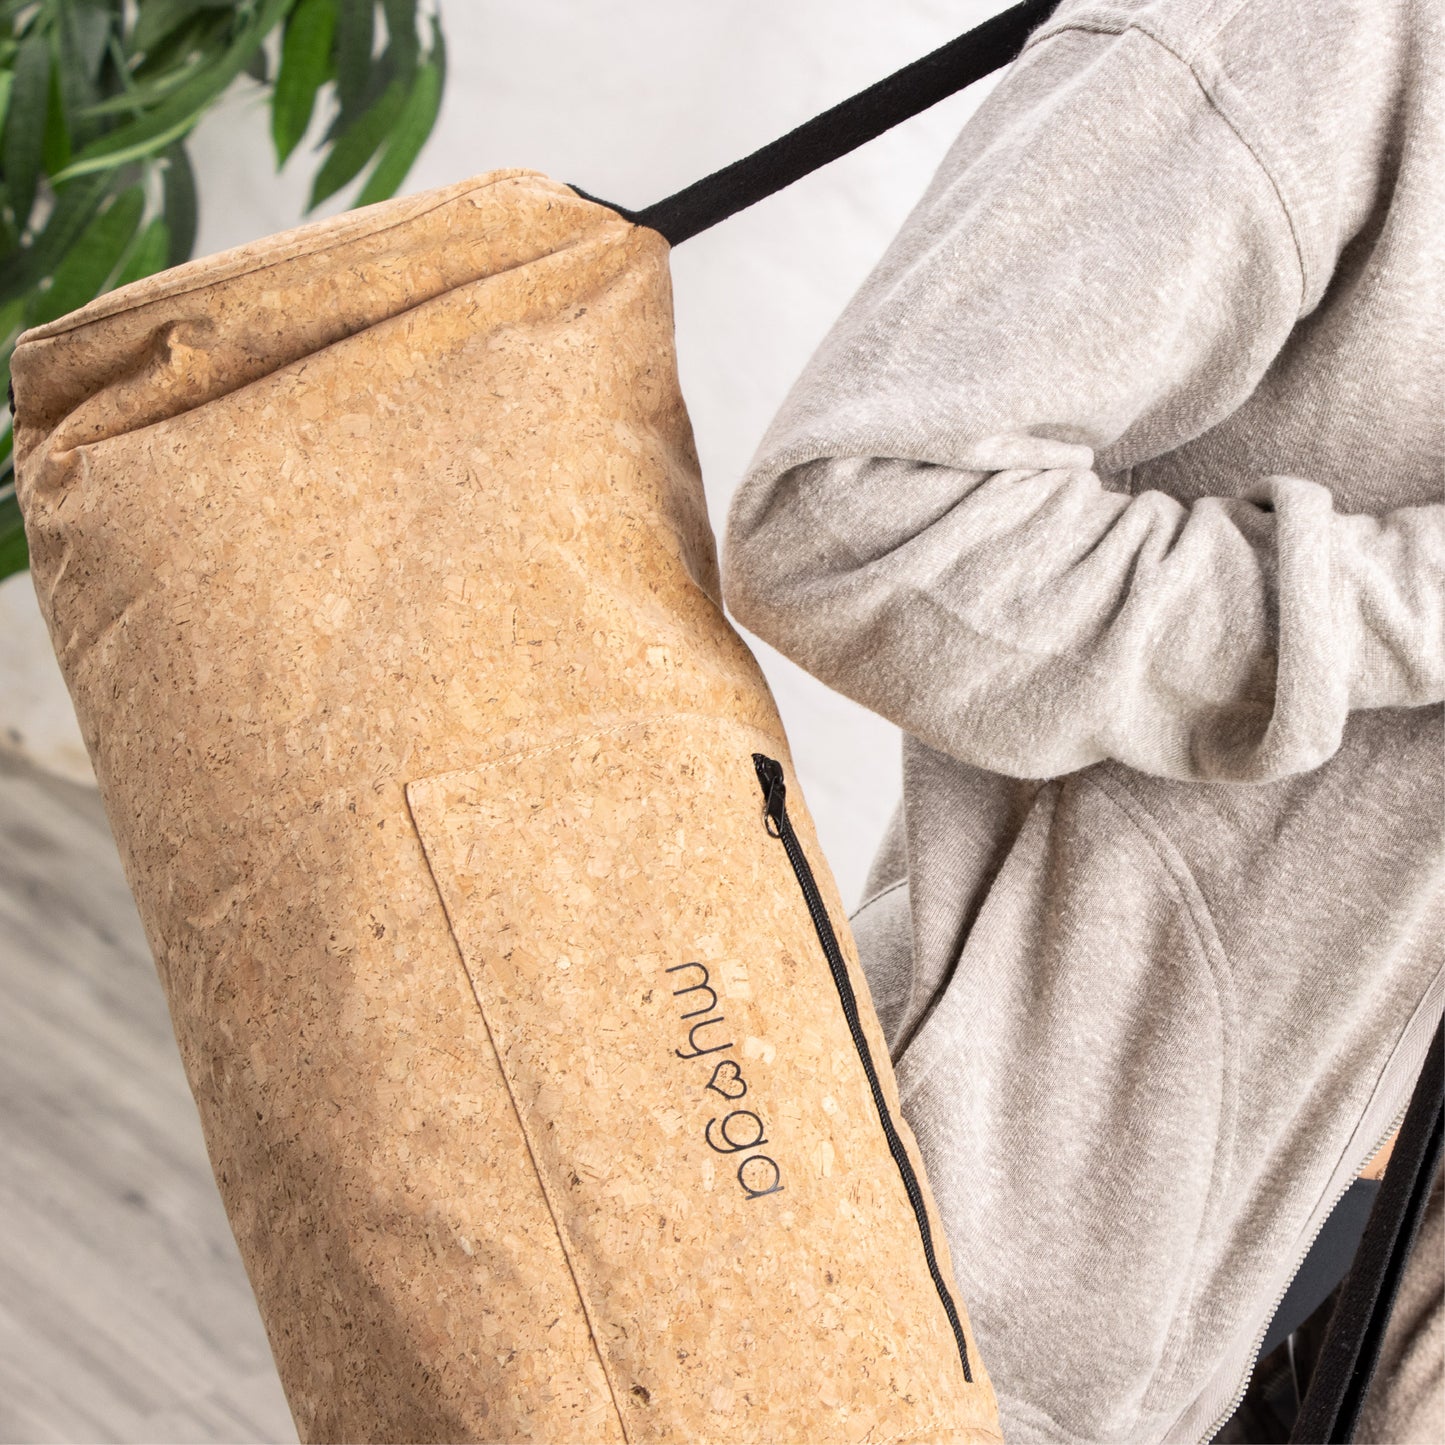 Cork Yoga Carry Bag